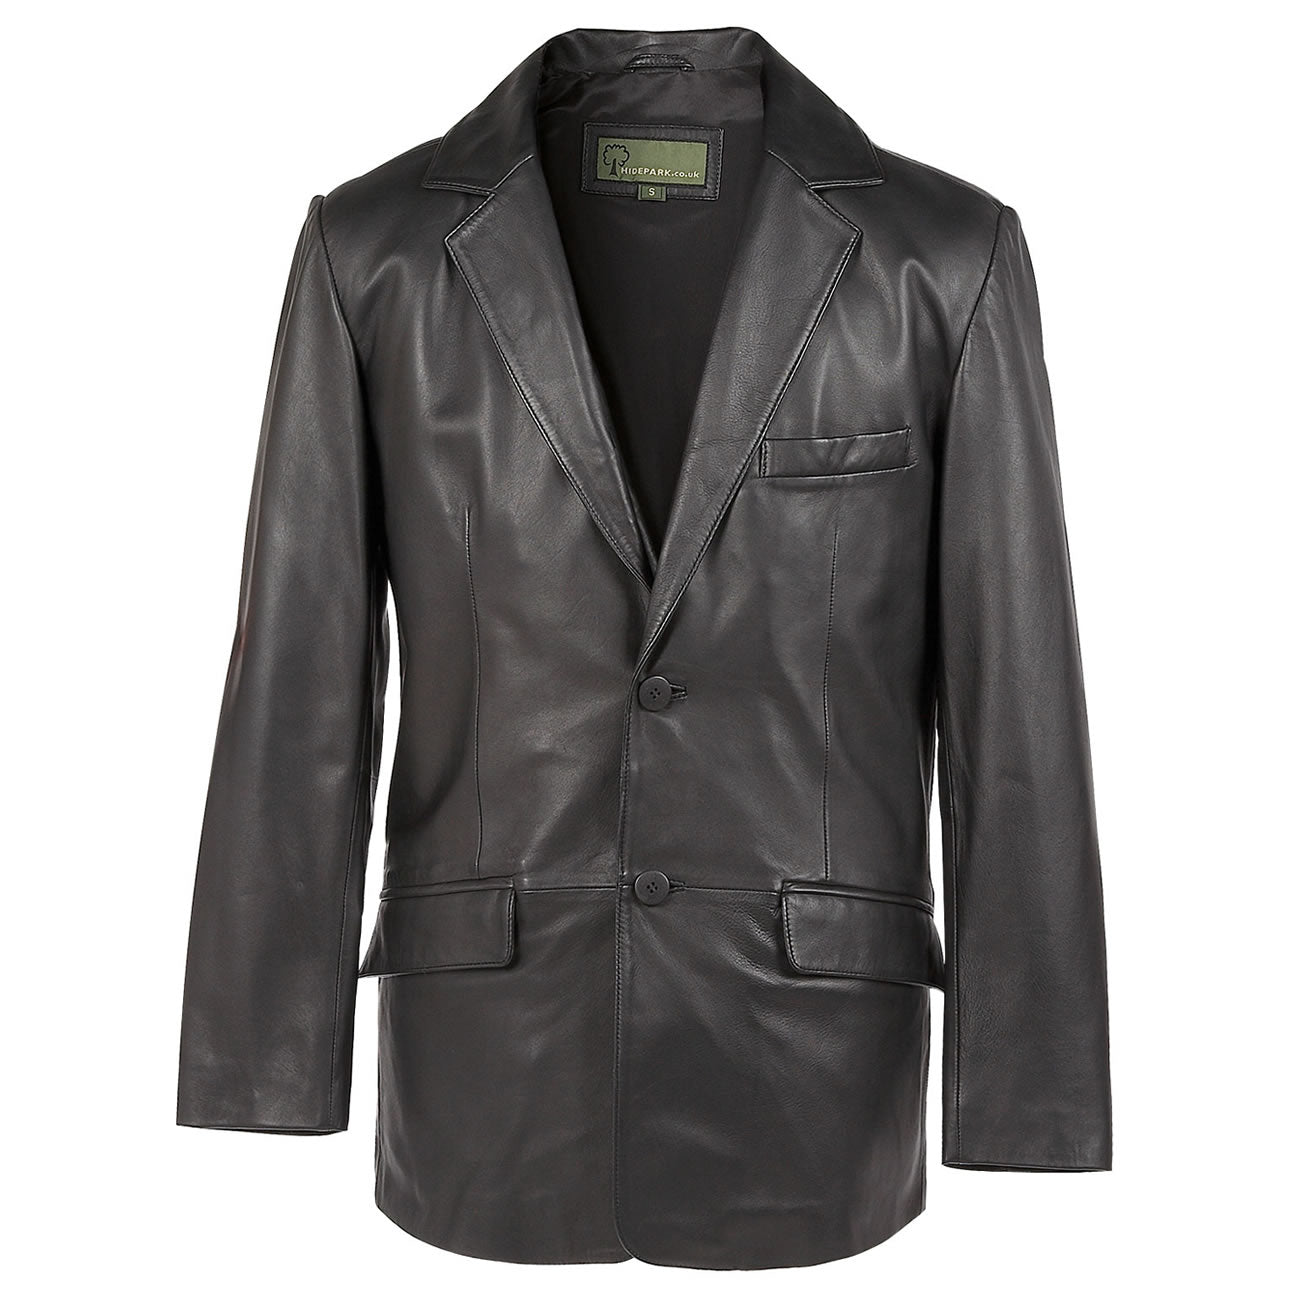 728: Men's Black Leather Blazer